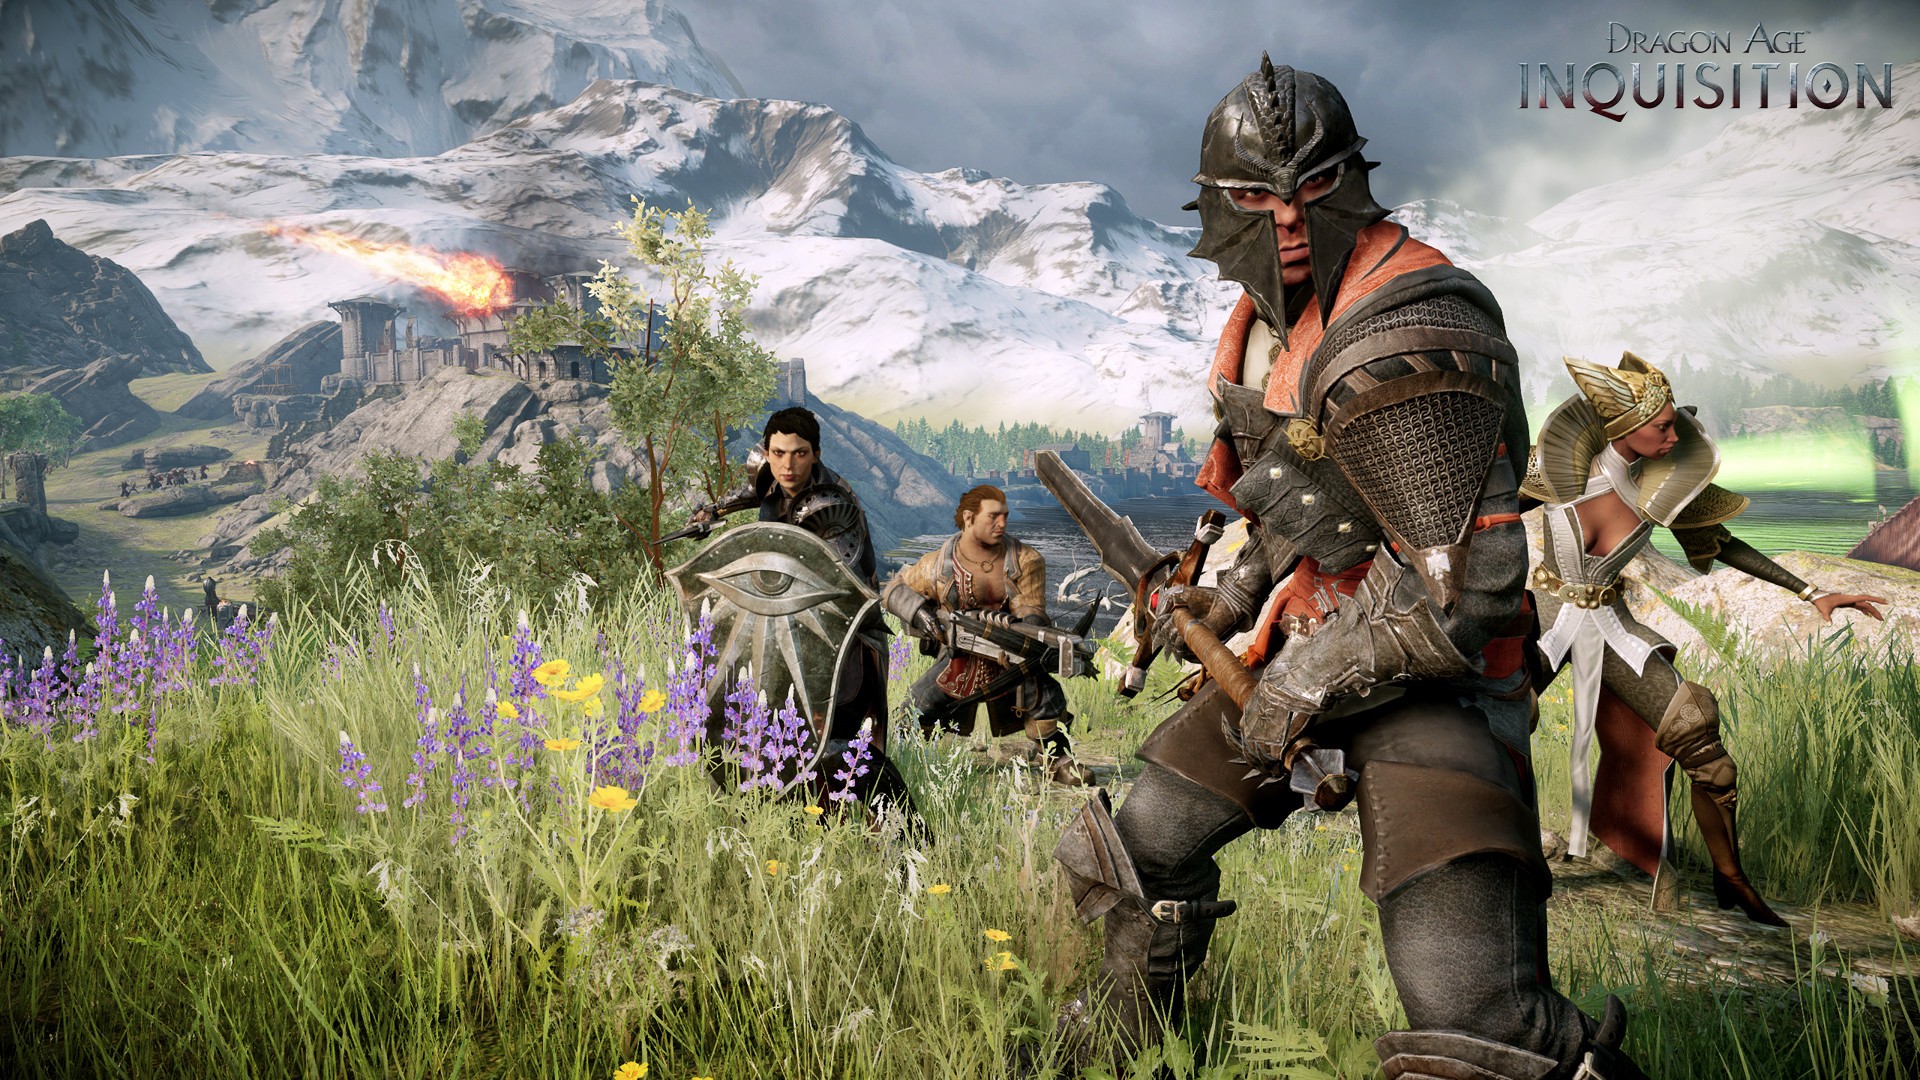 Dragon Age Inquisition for PC Game Origin Key Region Free